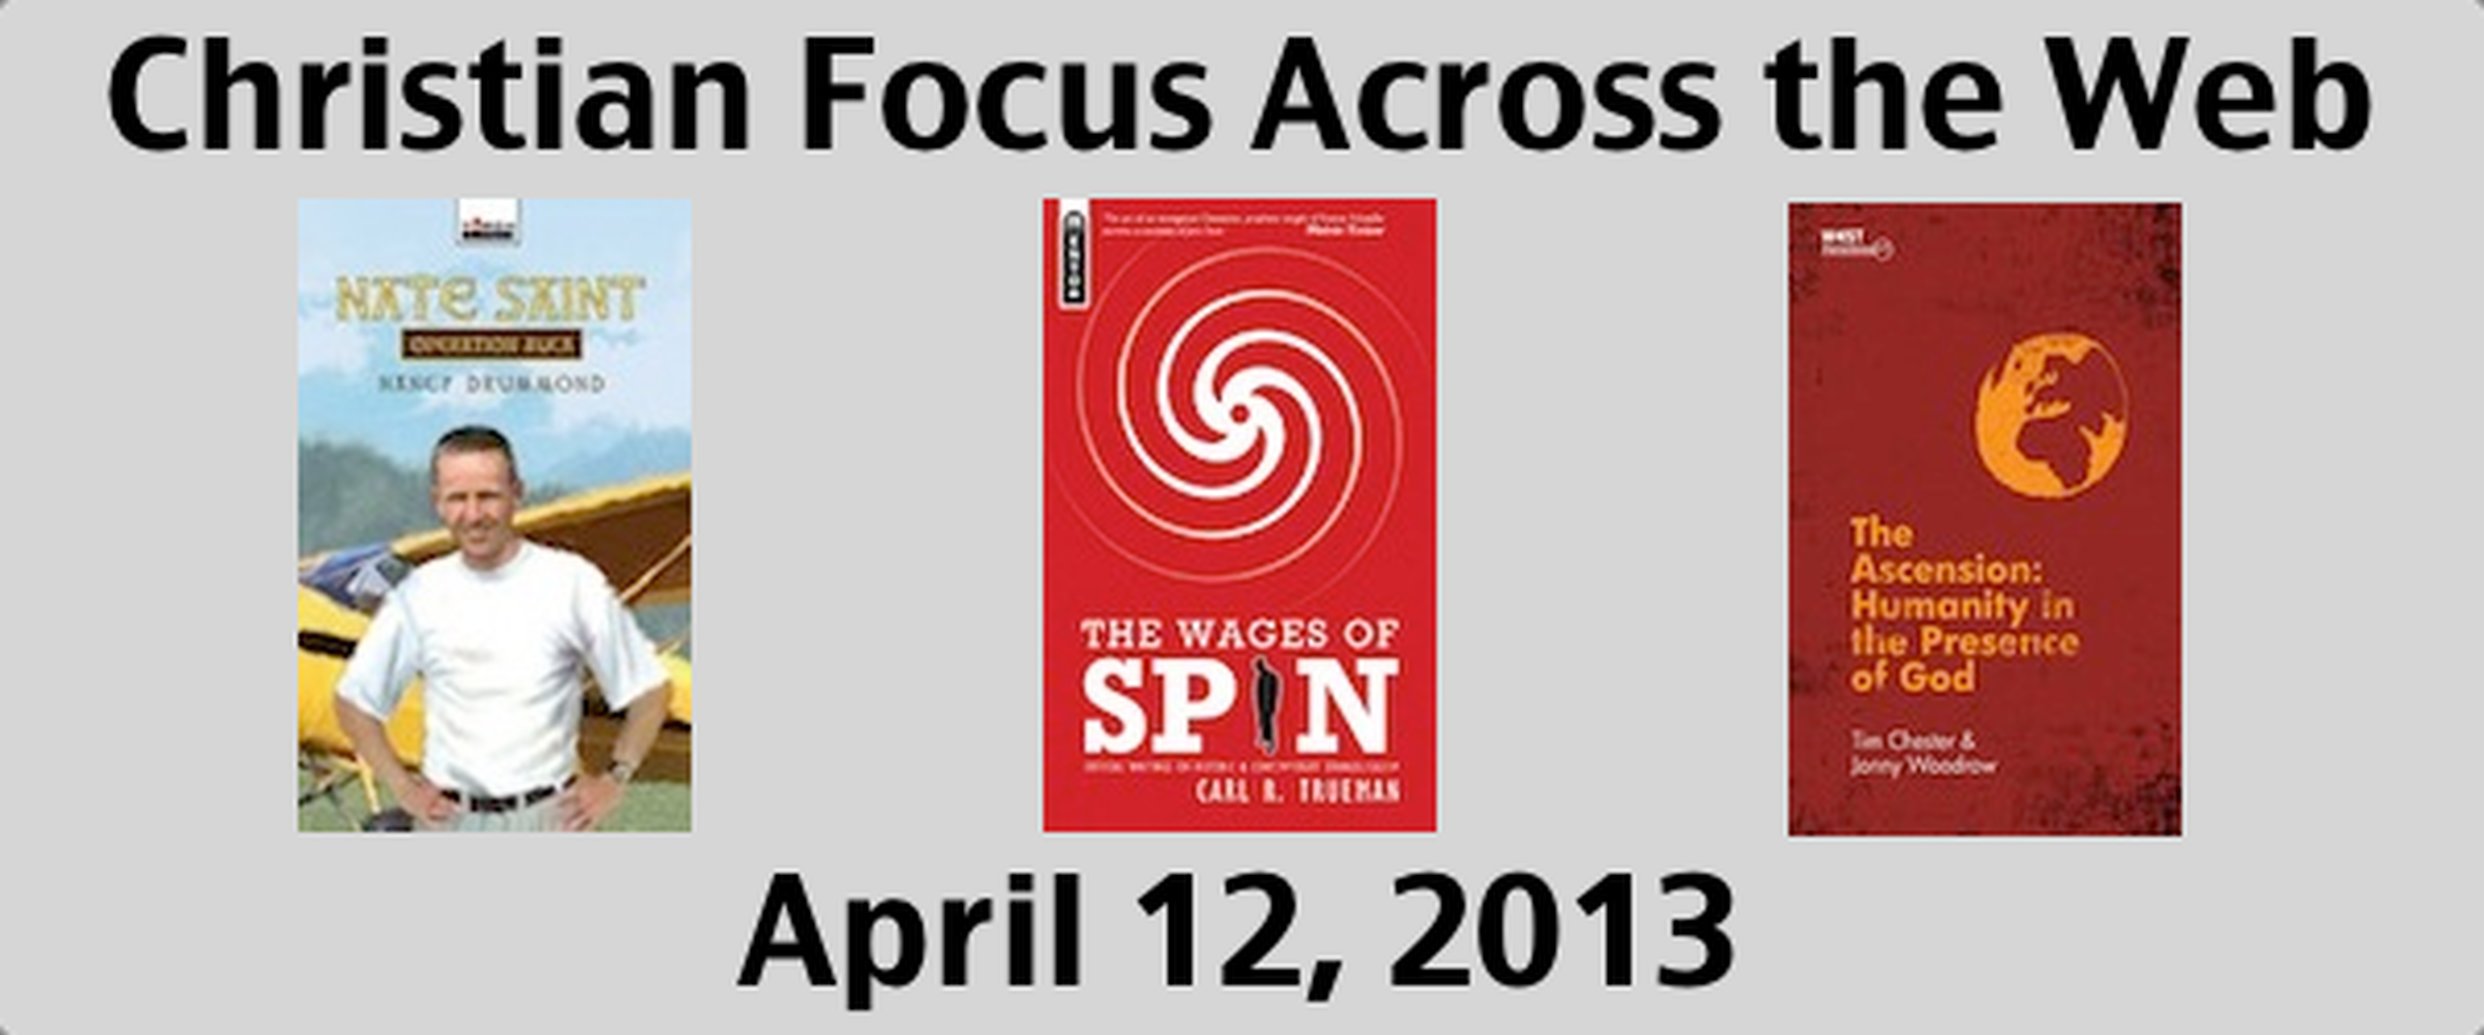 Christian Focus Across the Web - April 12, 2013